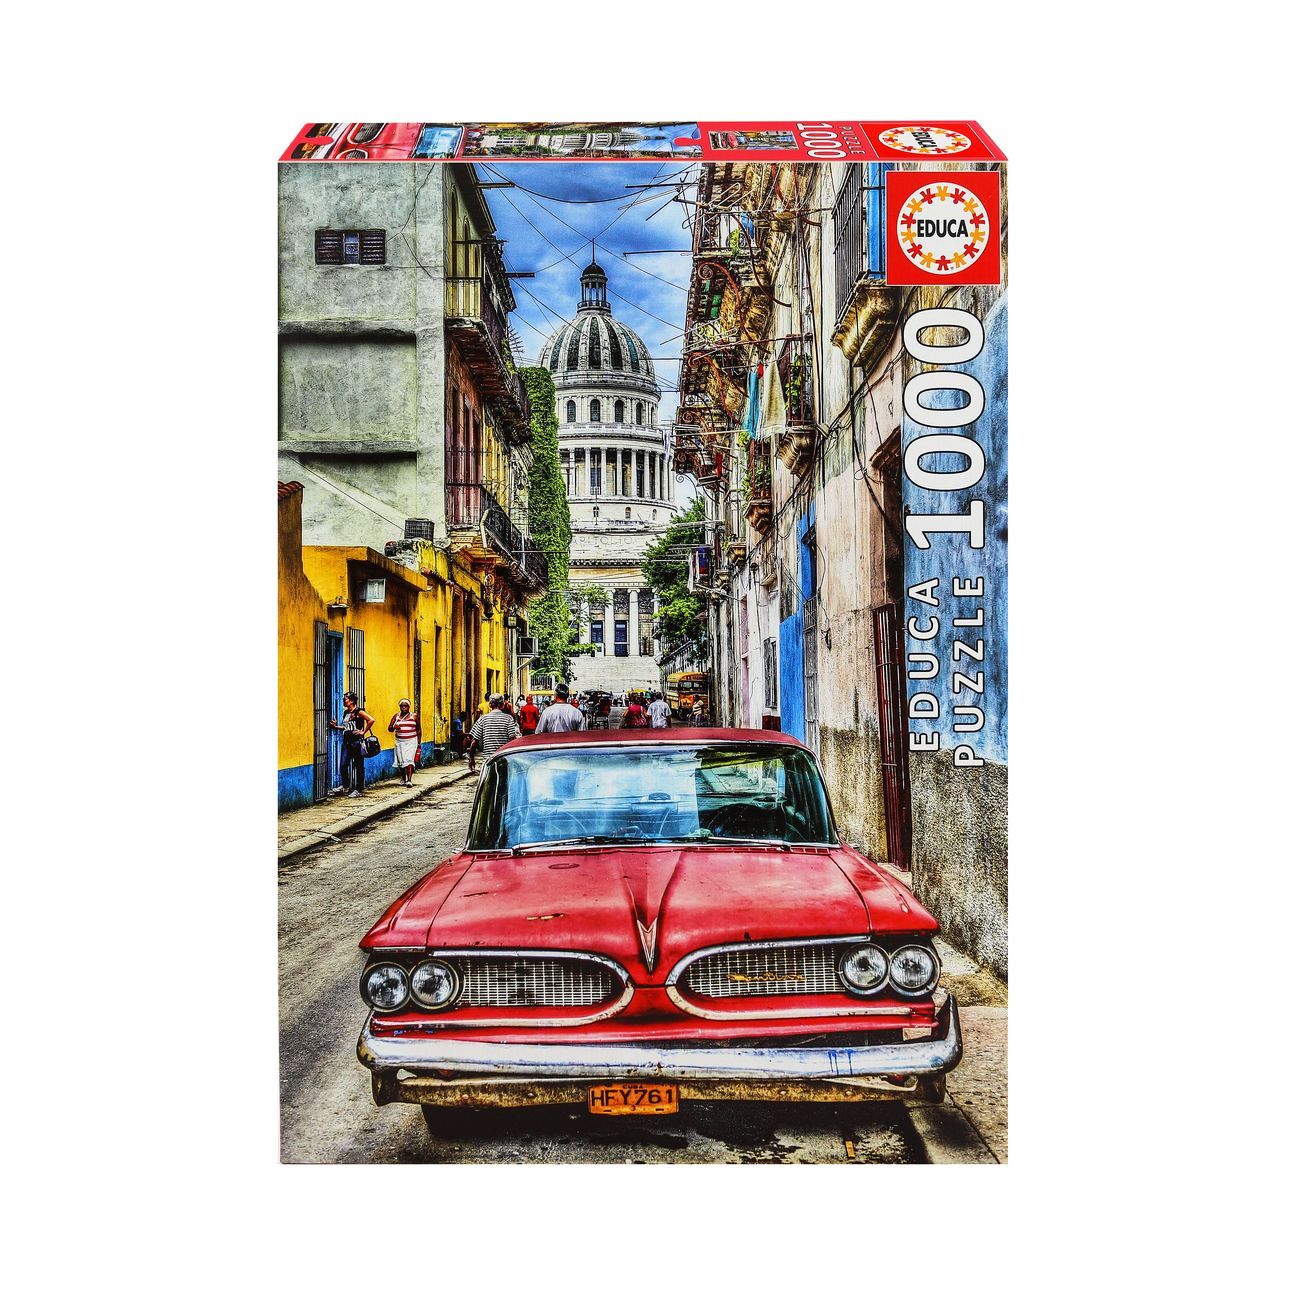 Educa Vintage Car In Old Havana 1000 PCs Jigsaw Puzzle